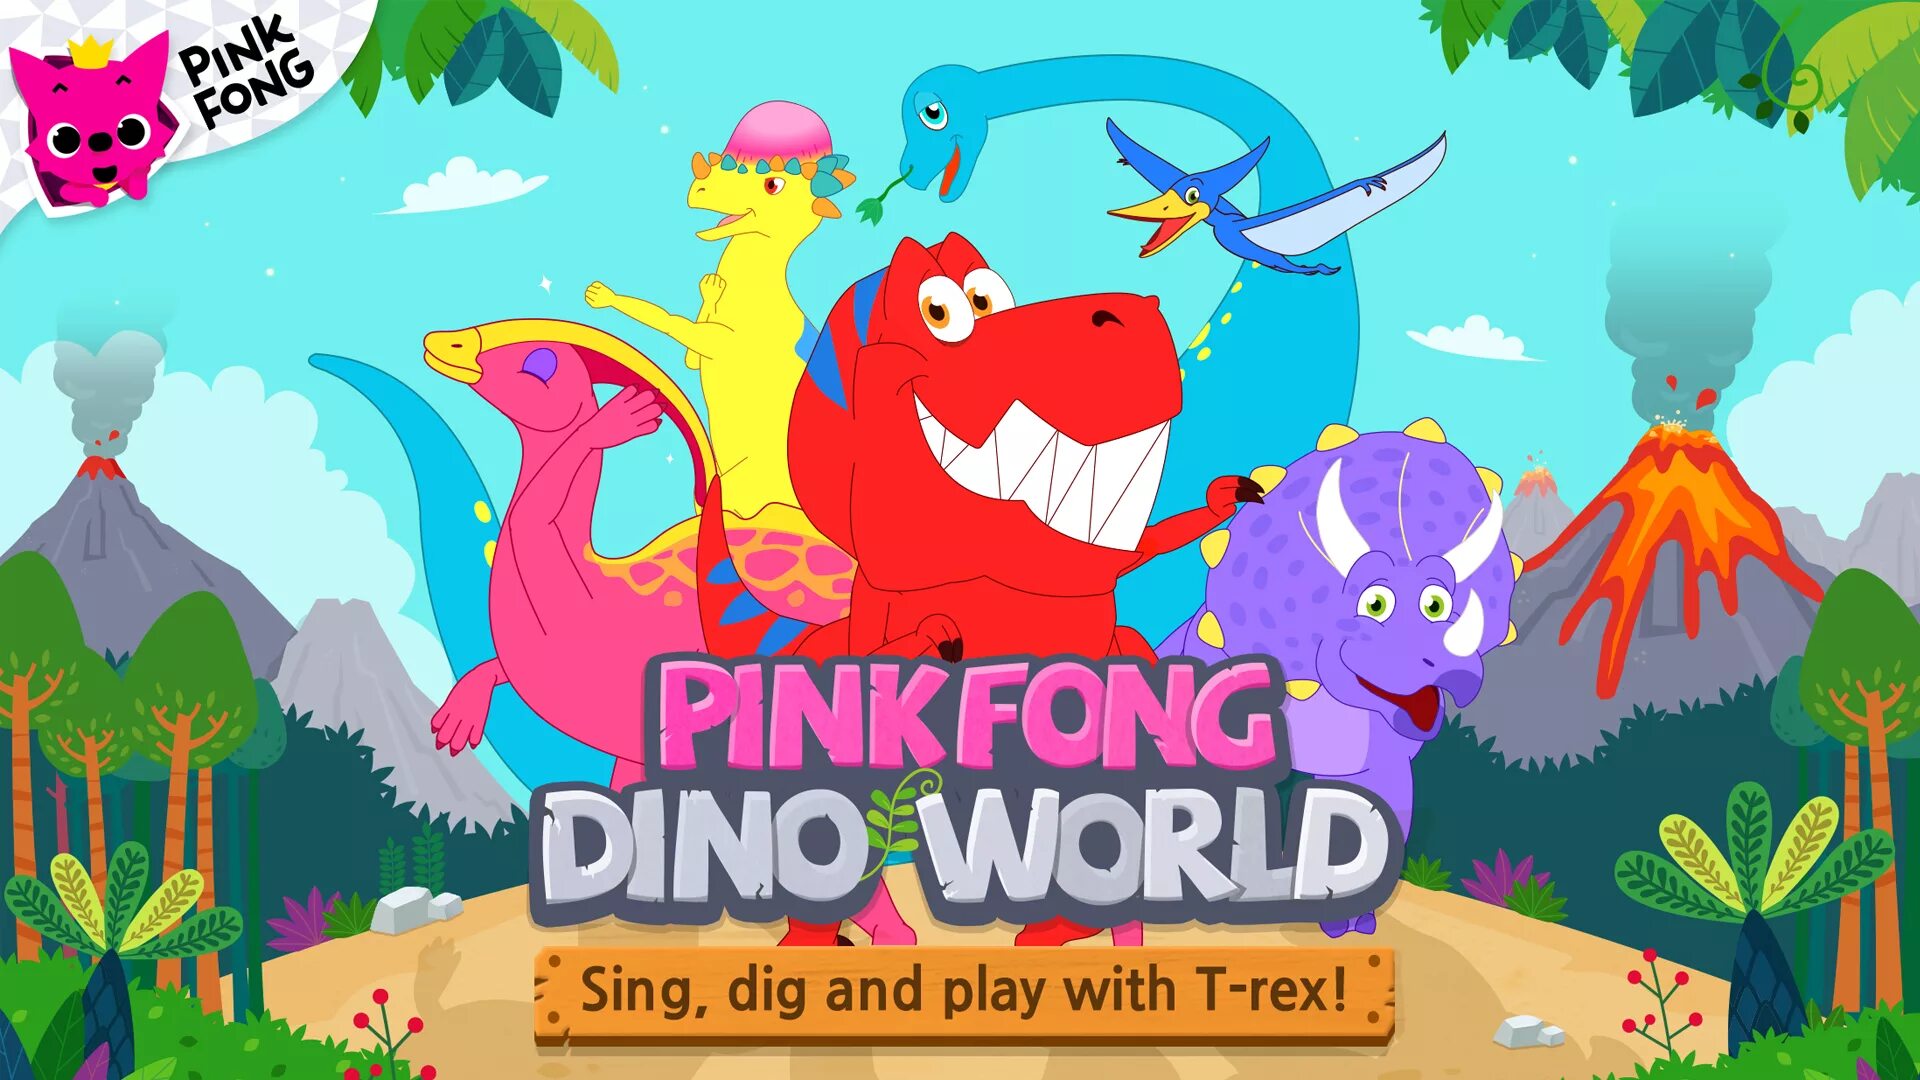 Sing world. Пинкфонг динозавры. Пинкфонг игры. Пинг понг динозавры. Dino World.